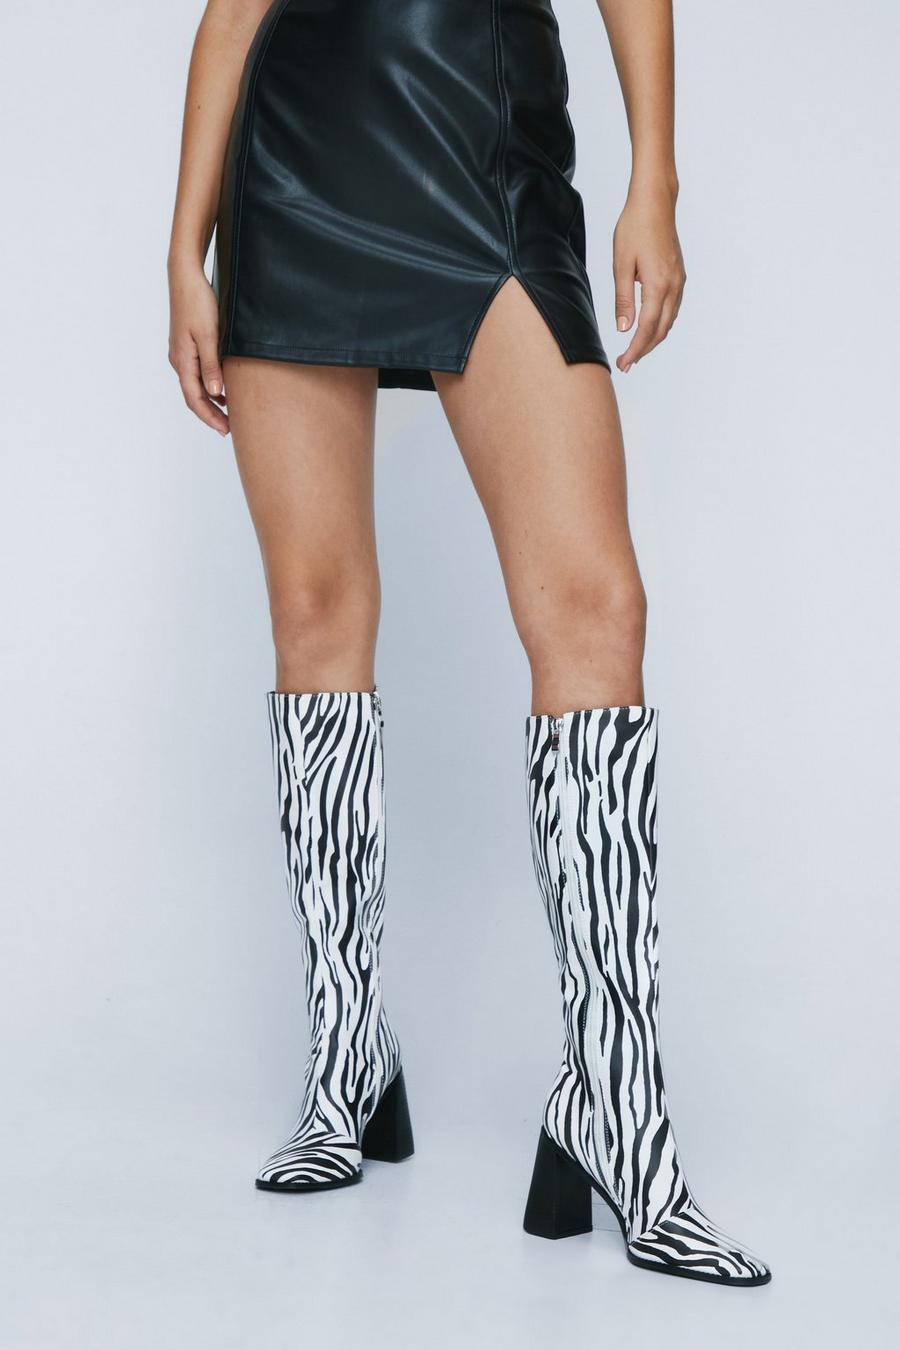 Zebra Print Knee High Boots